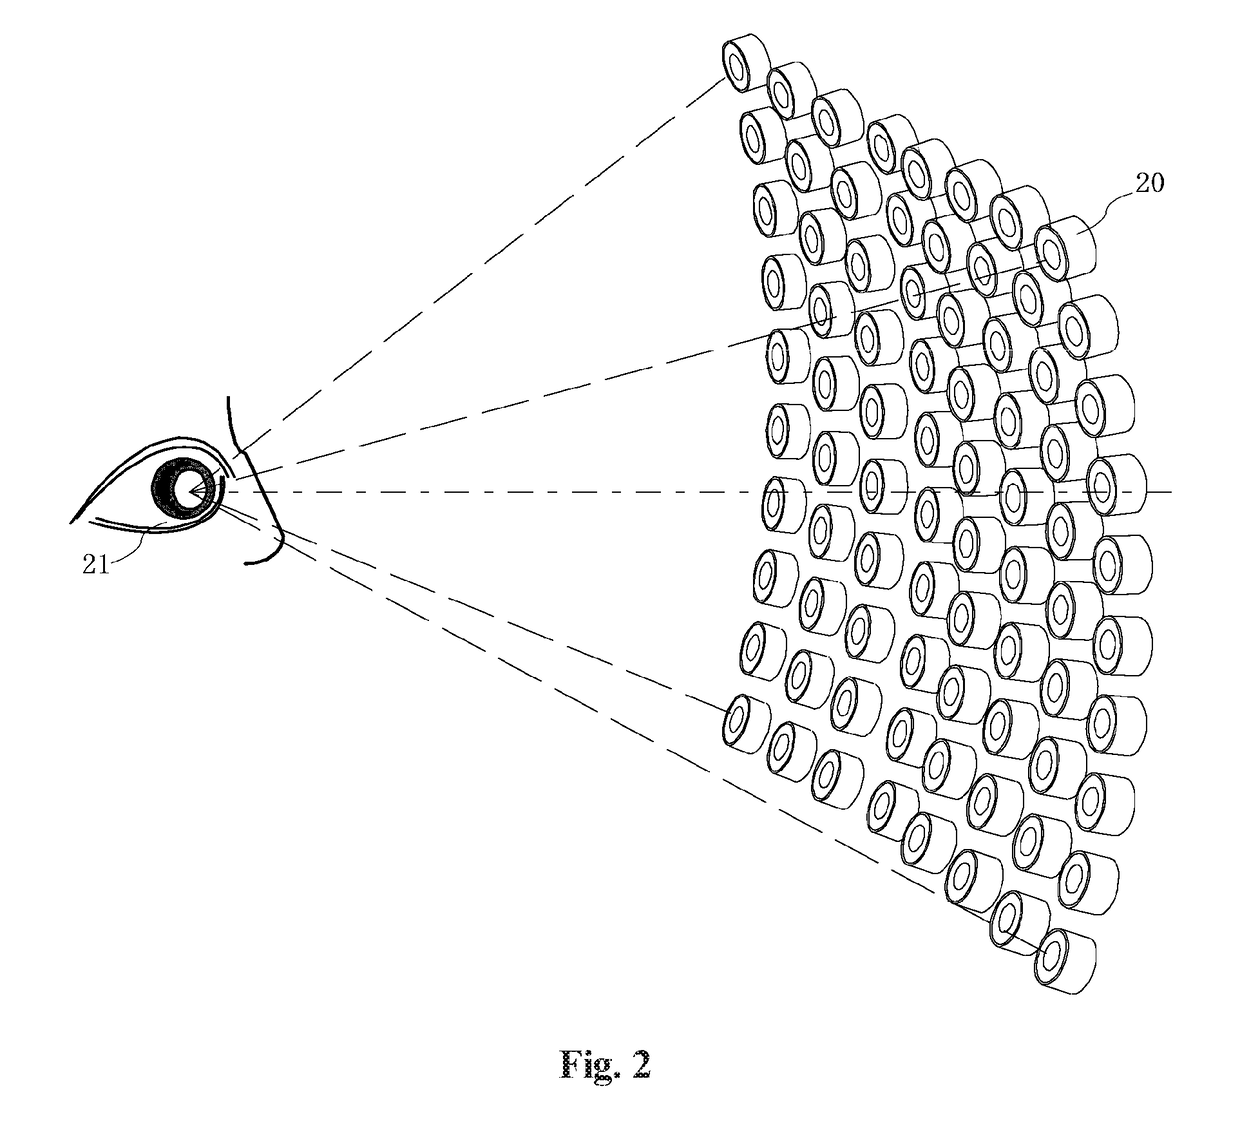 Non contact eyeball vibration type tonometer